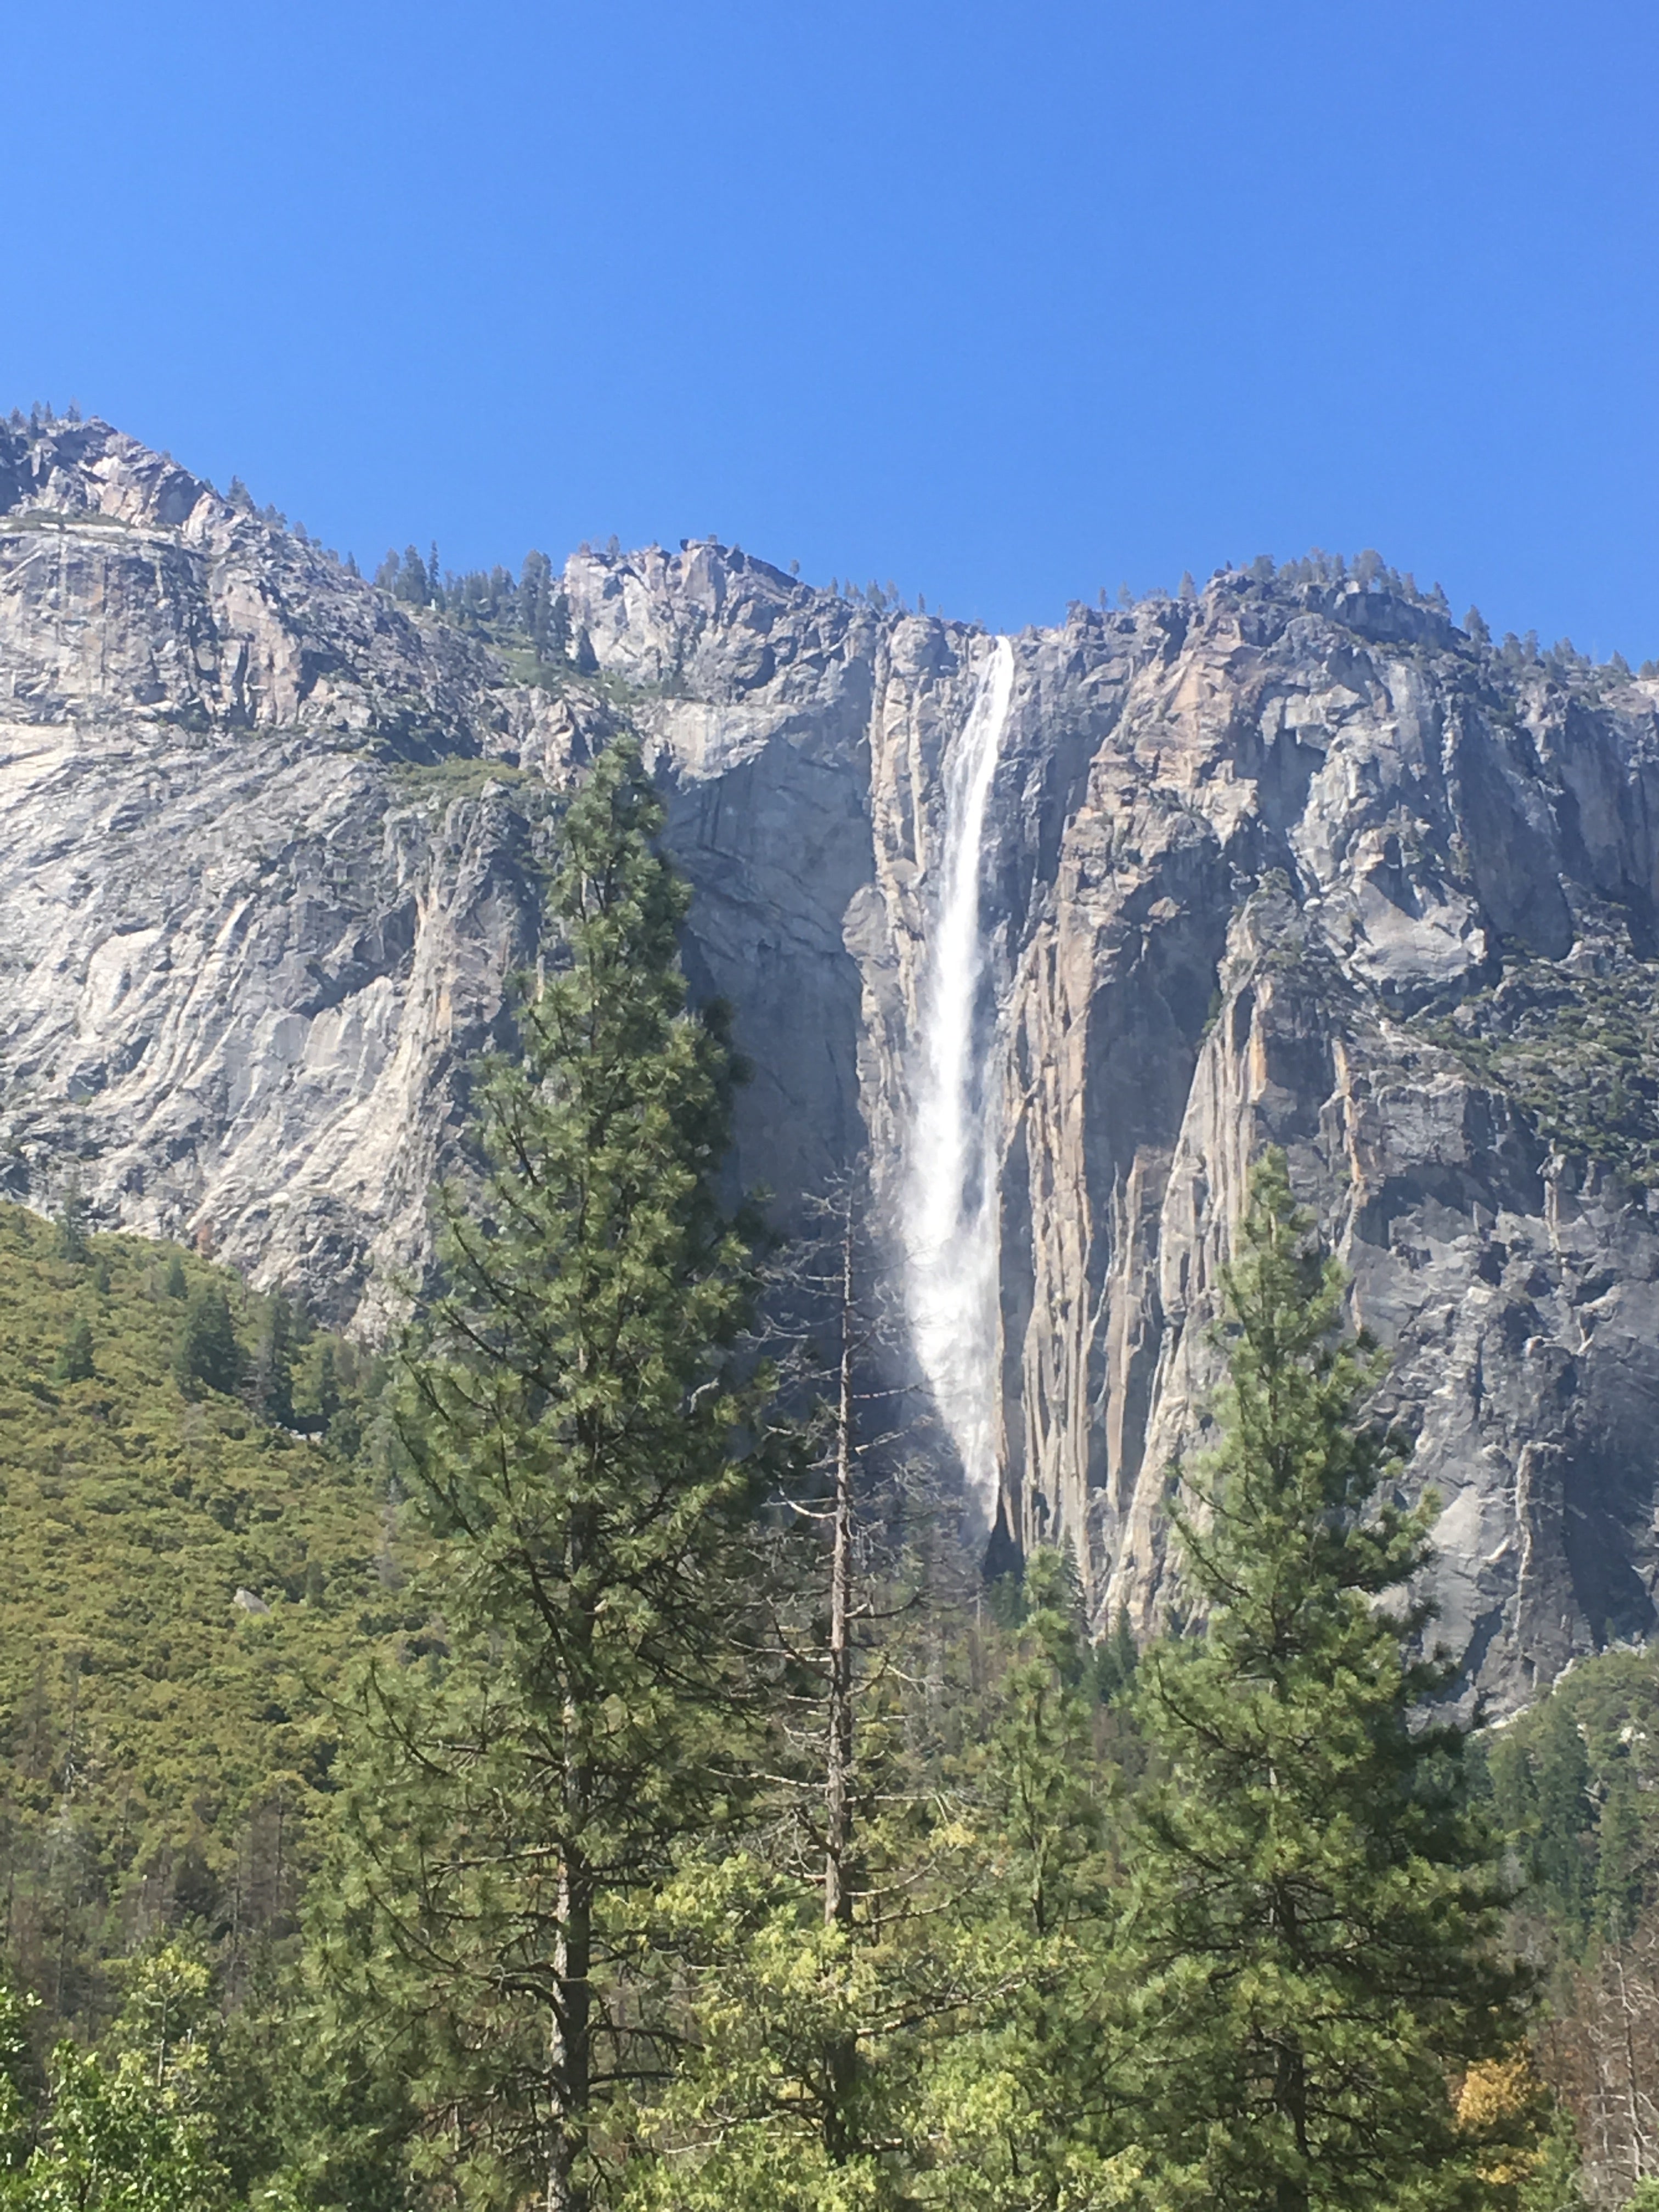 Nearby Yosemite